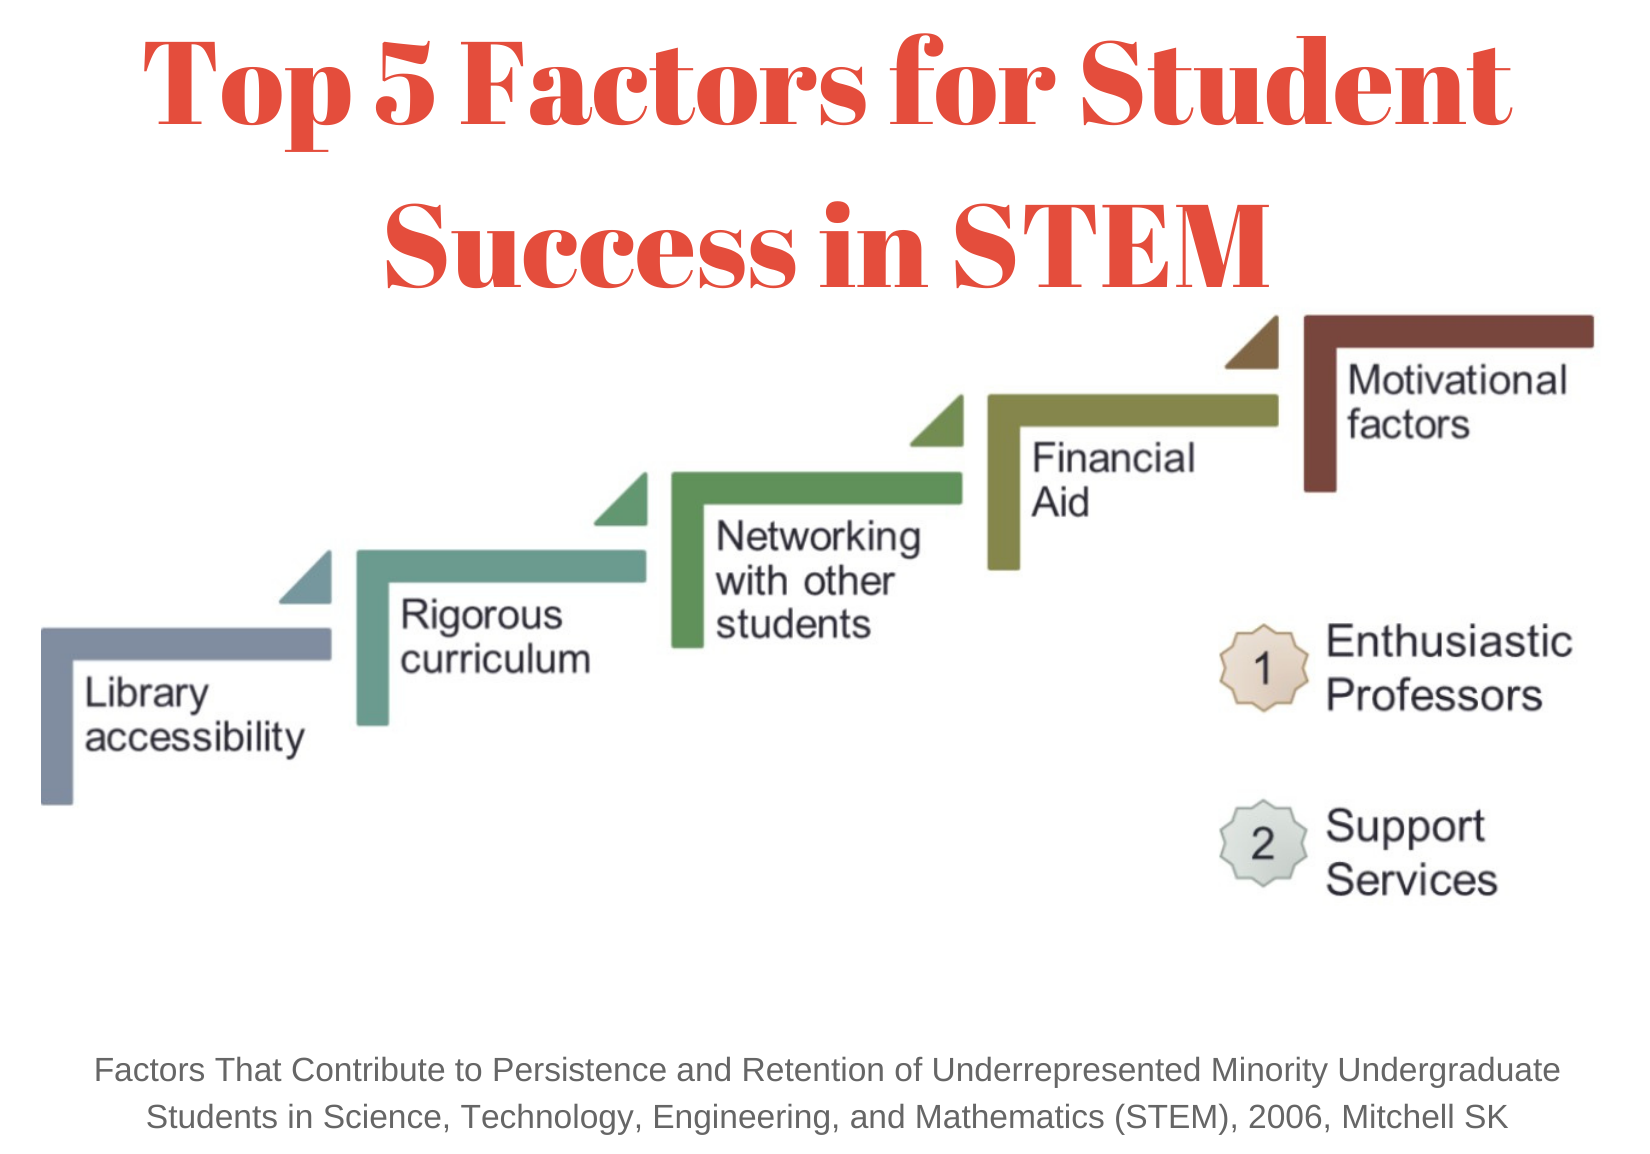 Top 5 factors for student success in STEM